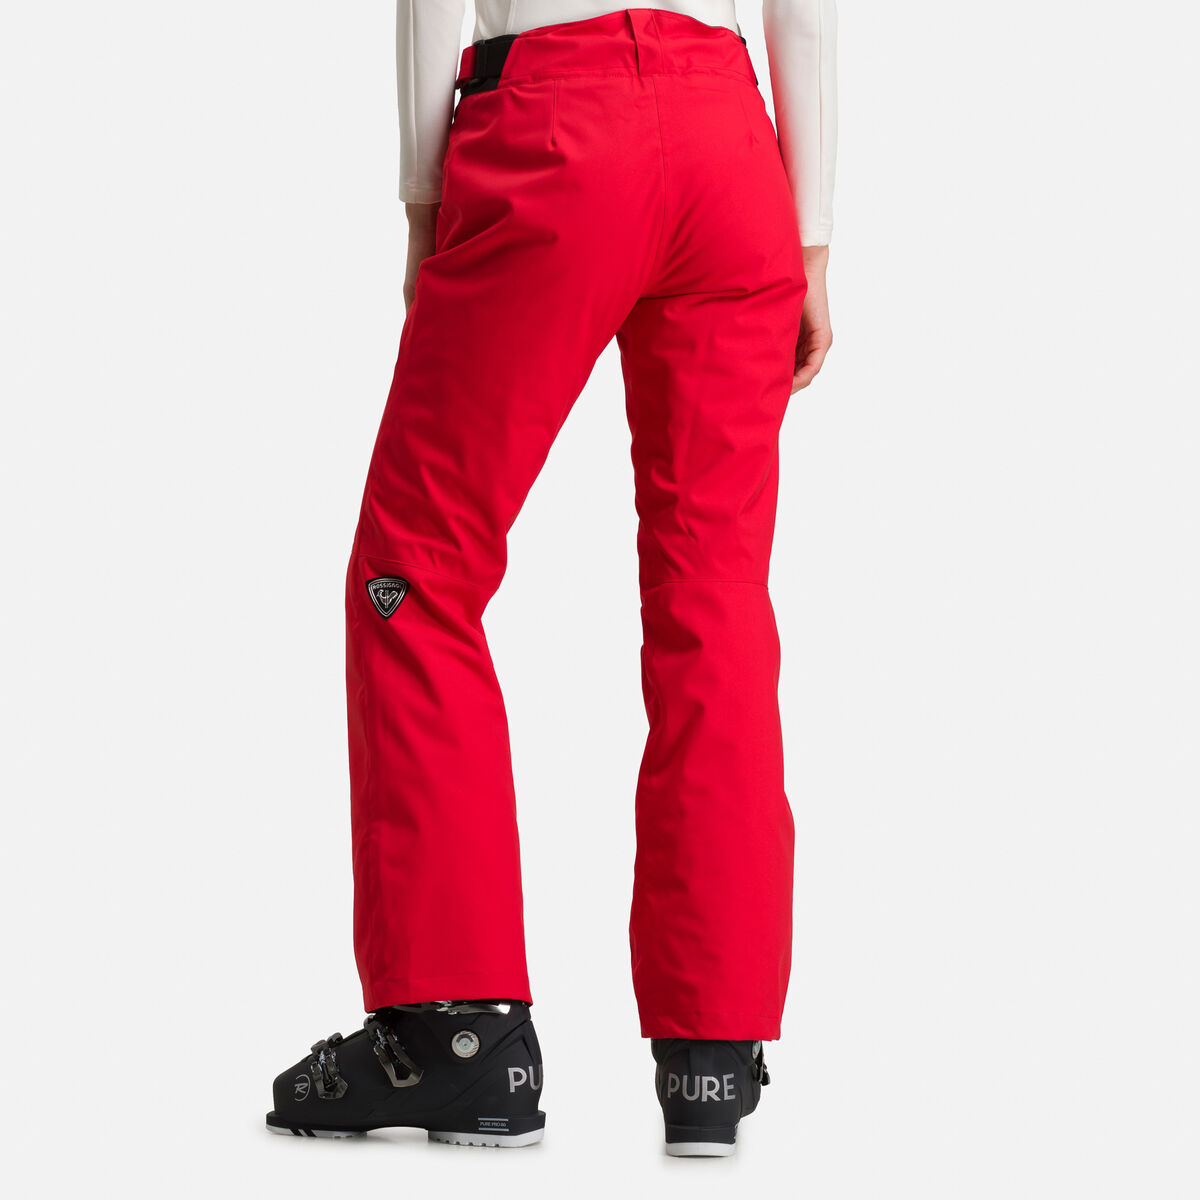 Rossignol Women's Ski Pants Red